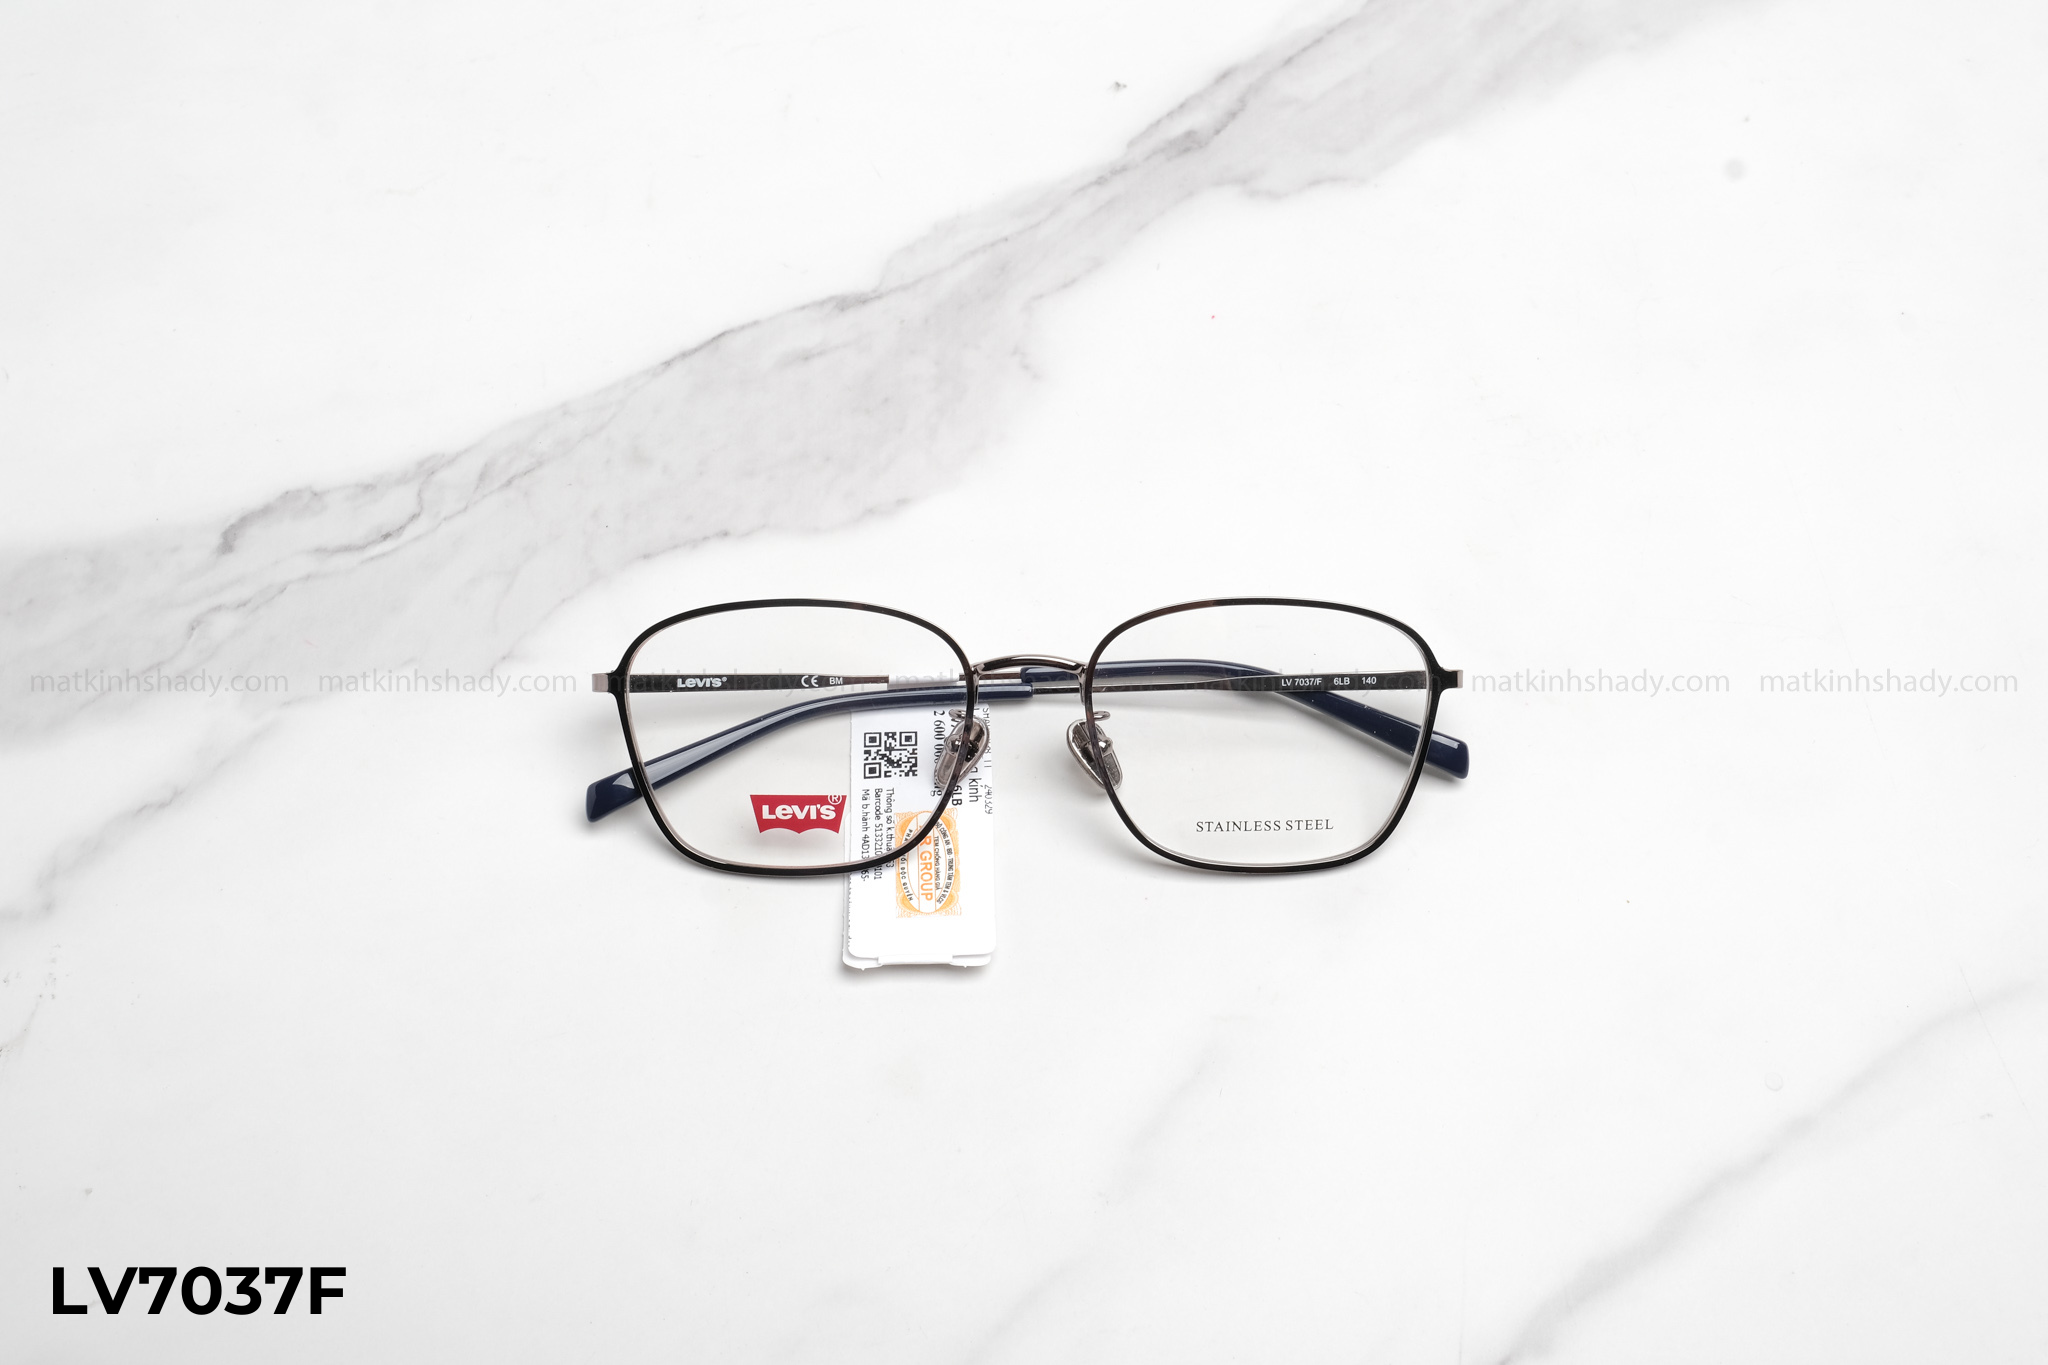  Levi's Eyewear - Glasses - LV7037F 